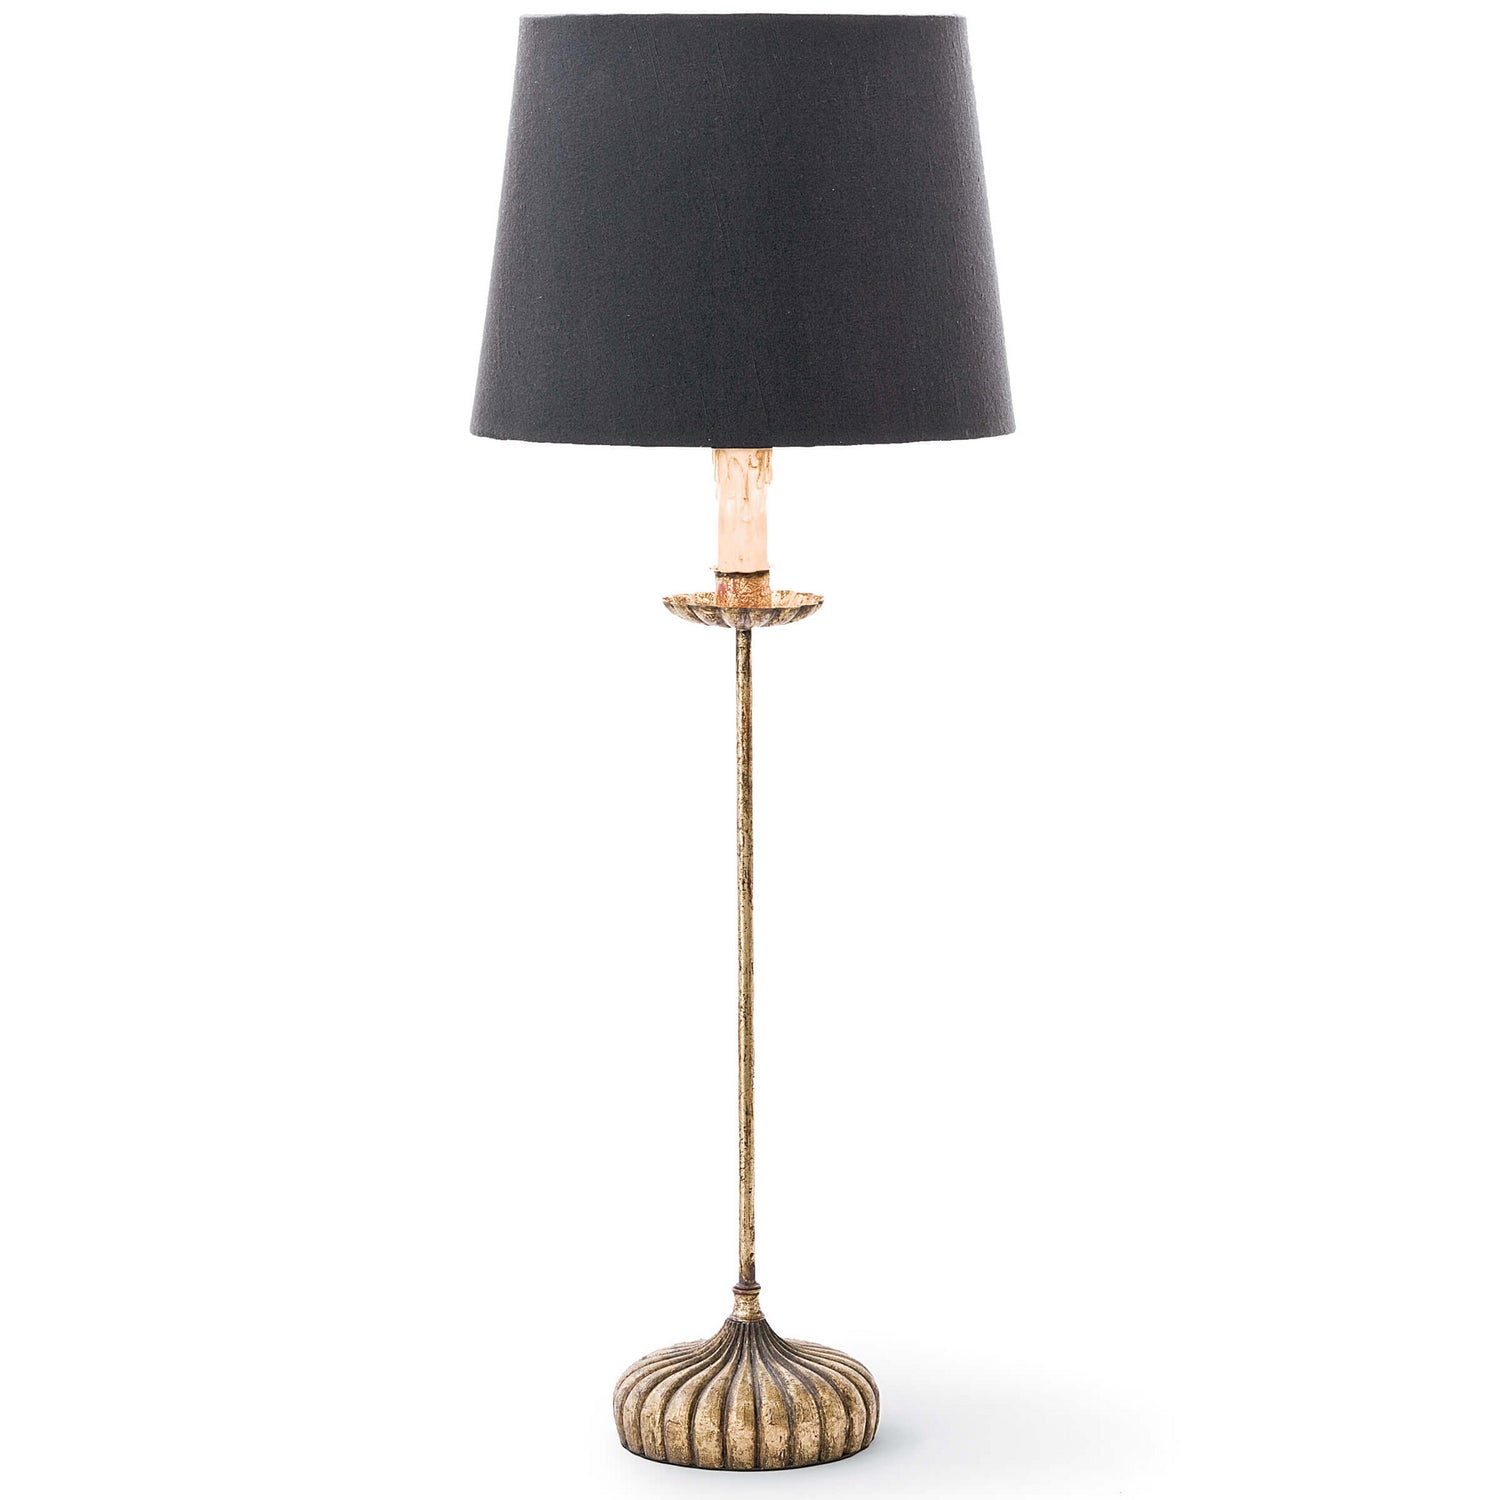 Regina Andrew - 13-1172 - One Light Table Lamp - Clove - Antique Gold Leaf